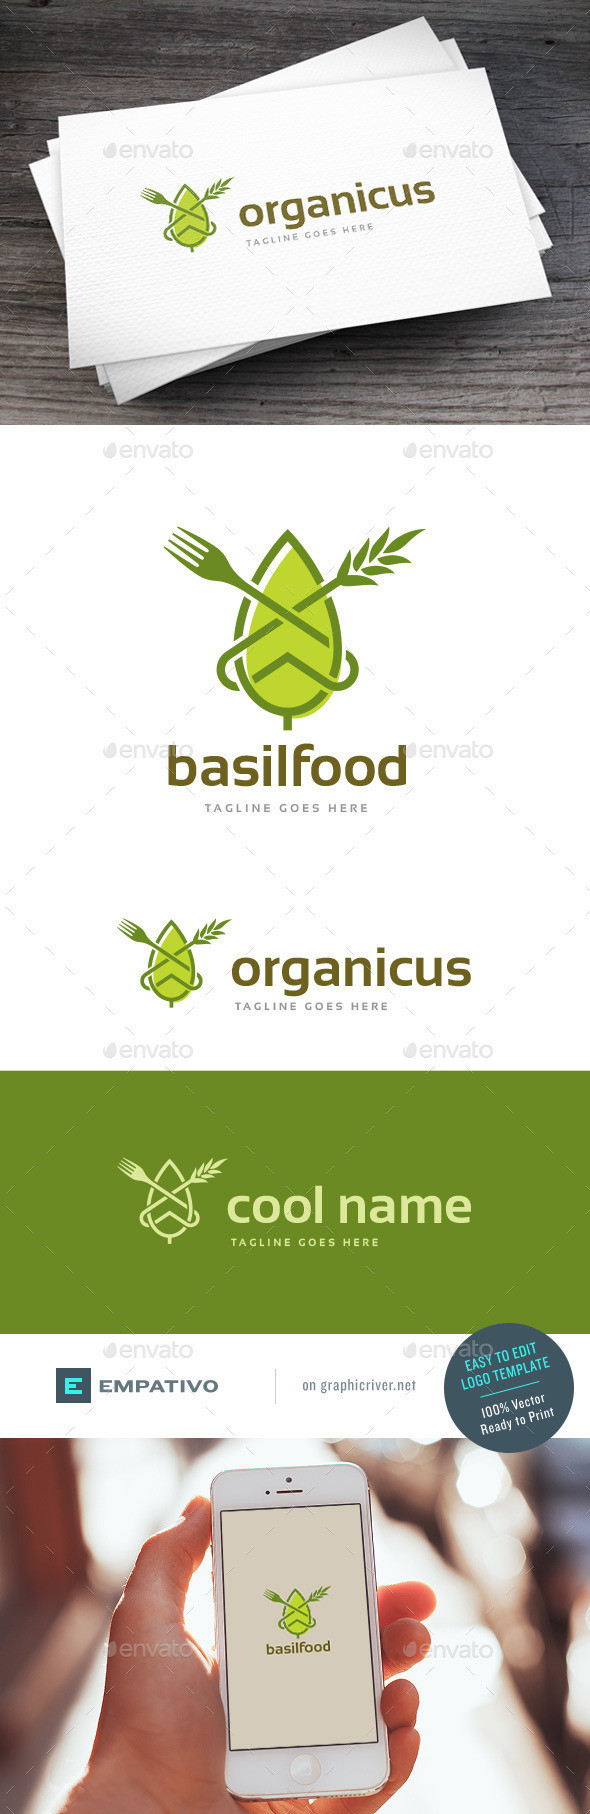 Basilfood logo template